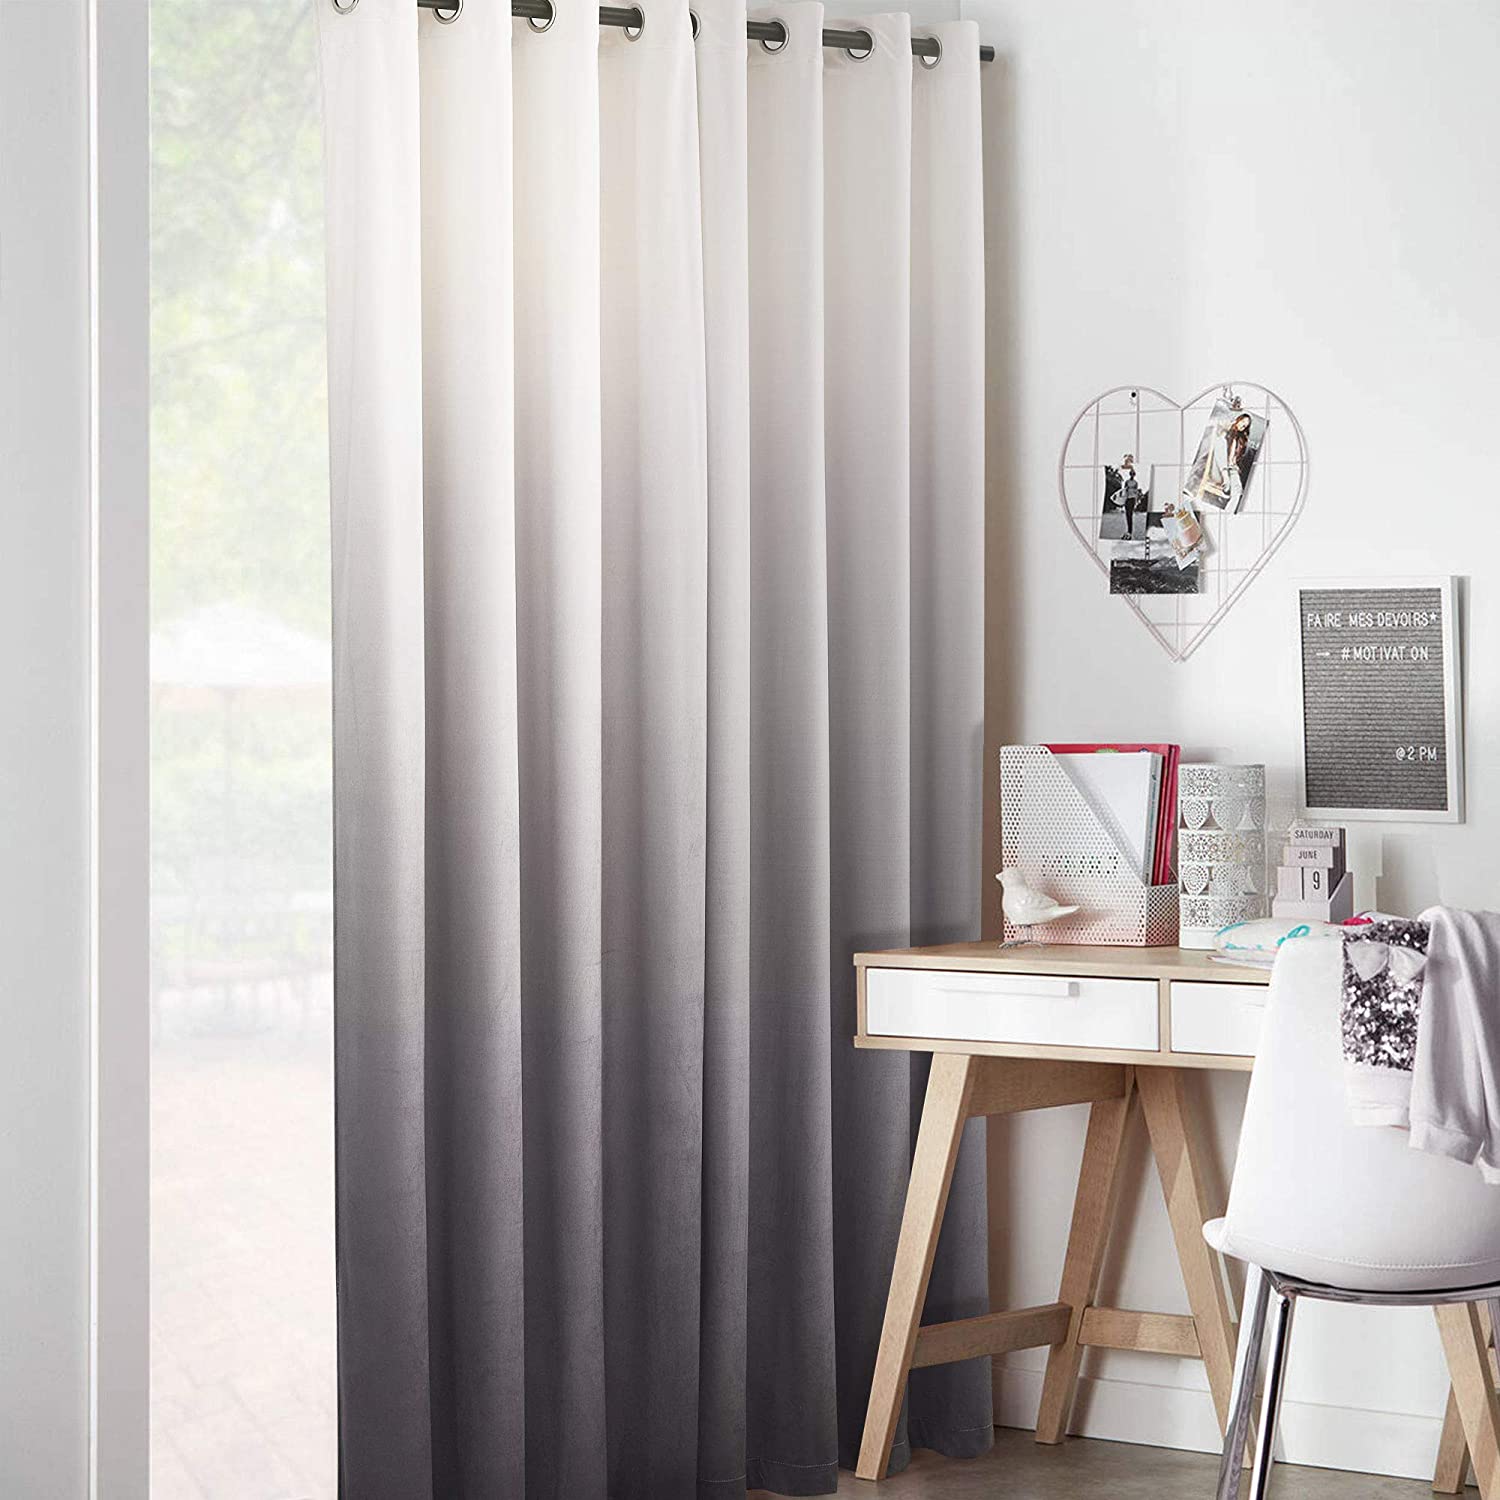 Grommet Velvet  Blackout Ombre Curtains For Living Room And Bedroom 2 Panels KGORGE Store